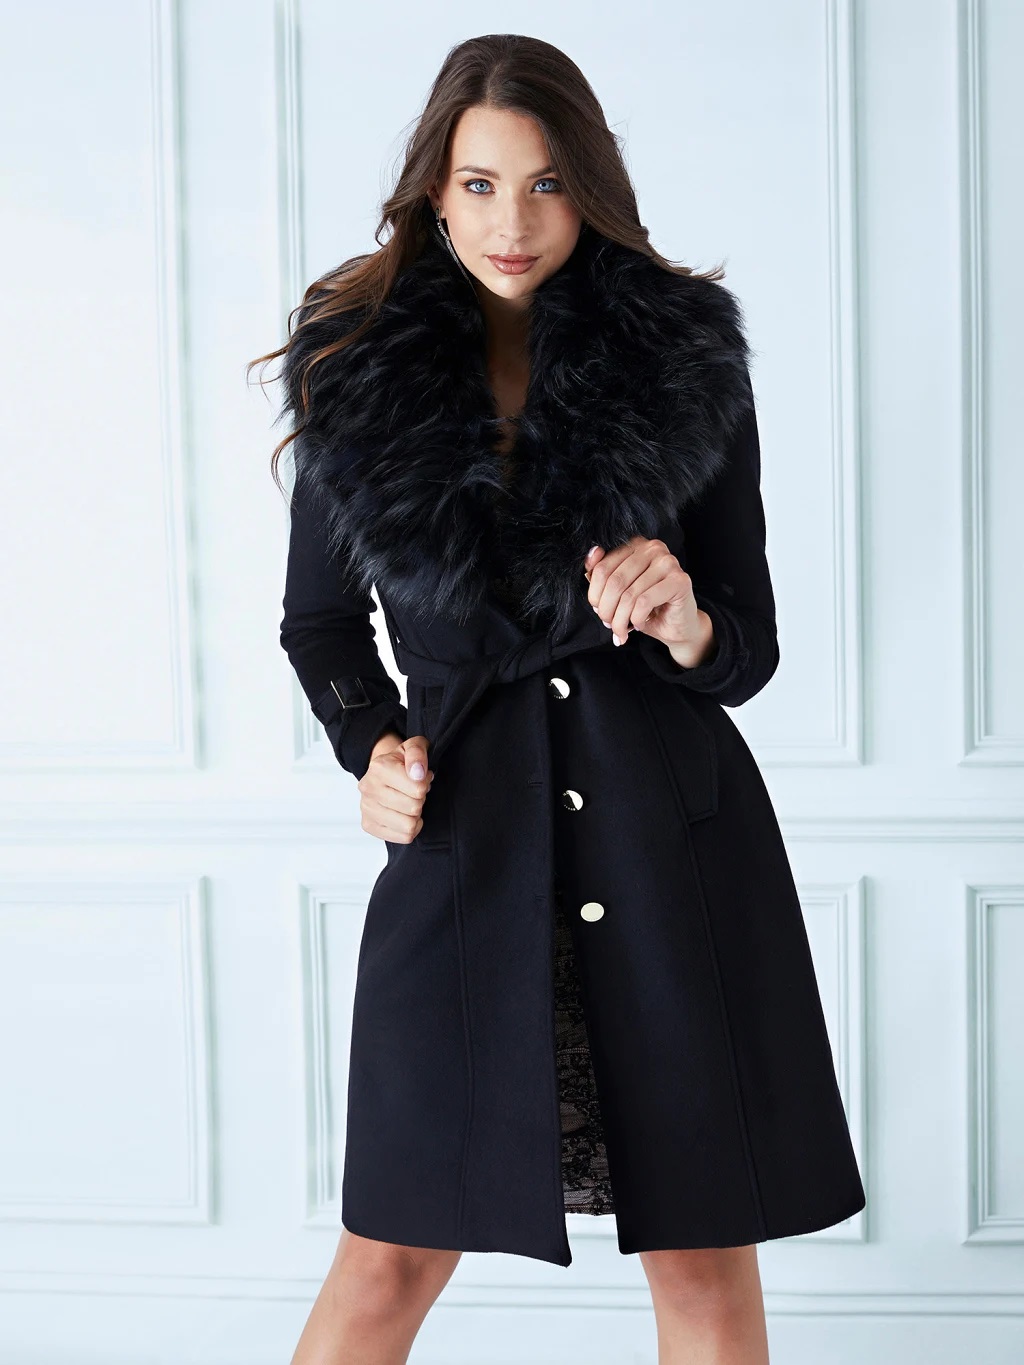 manteau black friday femme